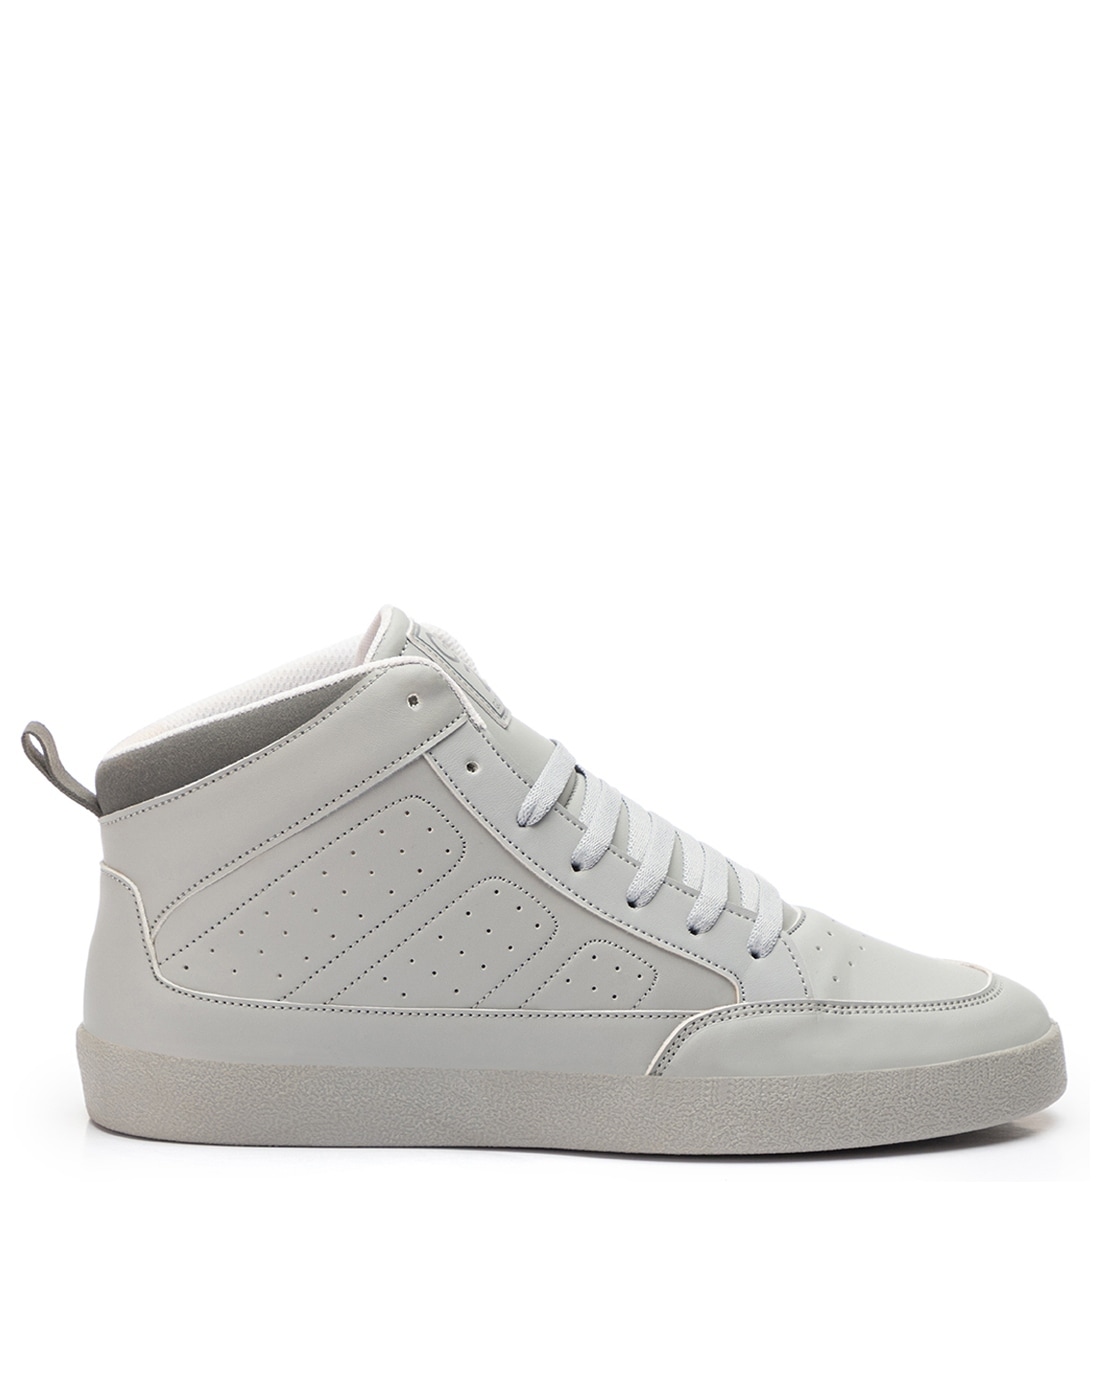 Buy New Balance 574+ Women's Sneakers Shoes - Grey | Foot Locker PH | Foot  Locker PH